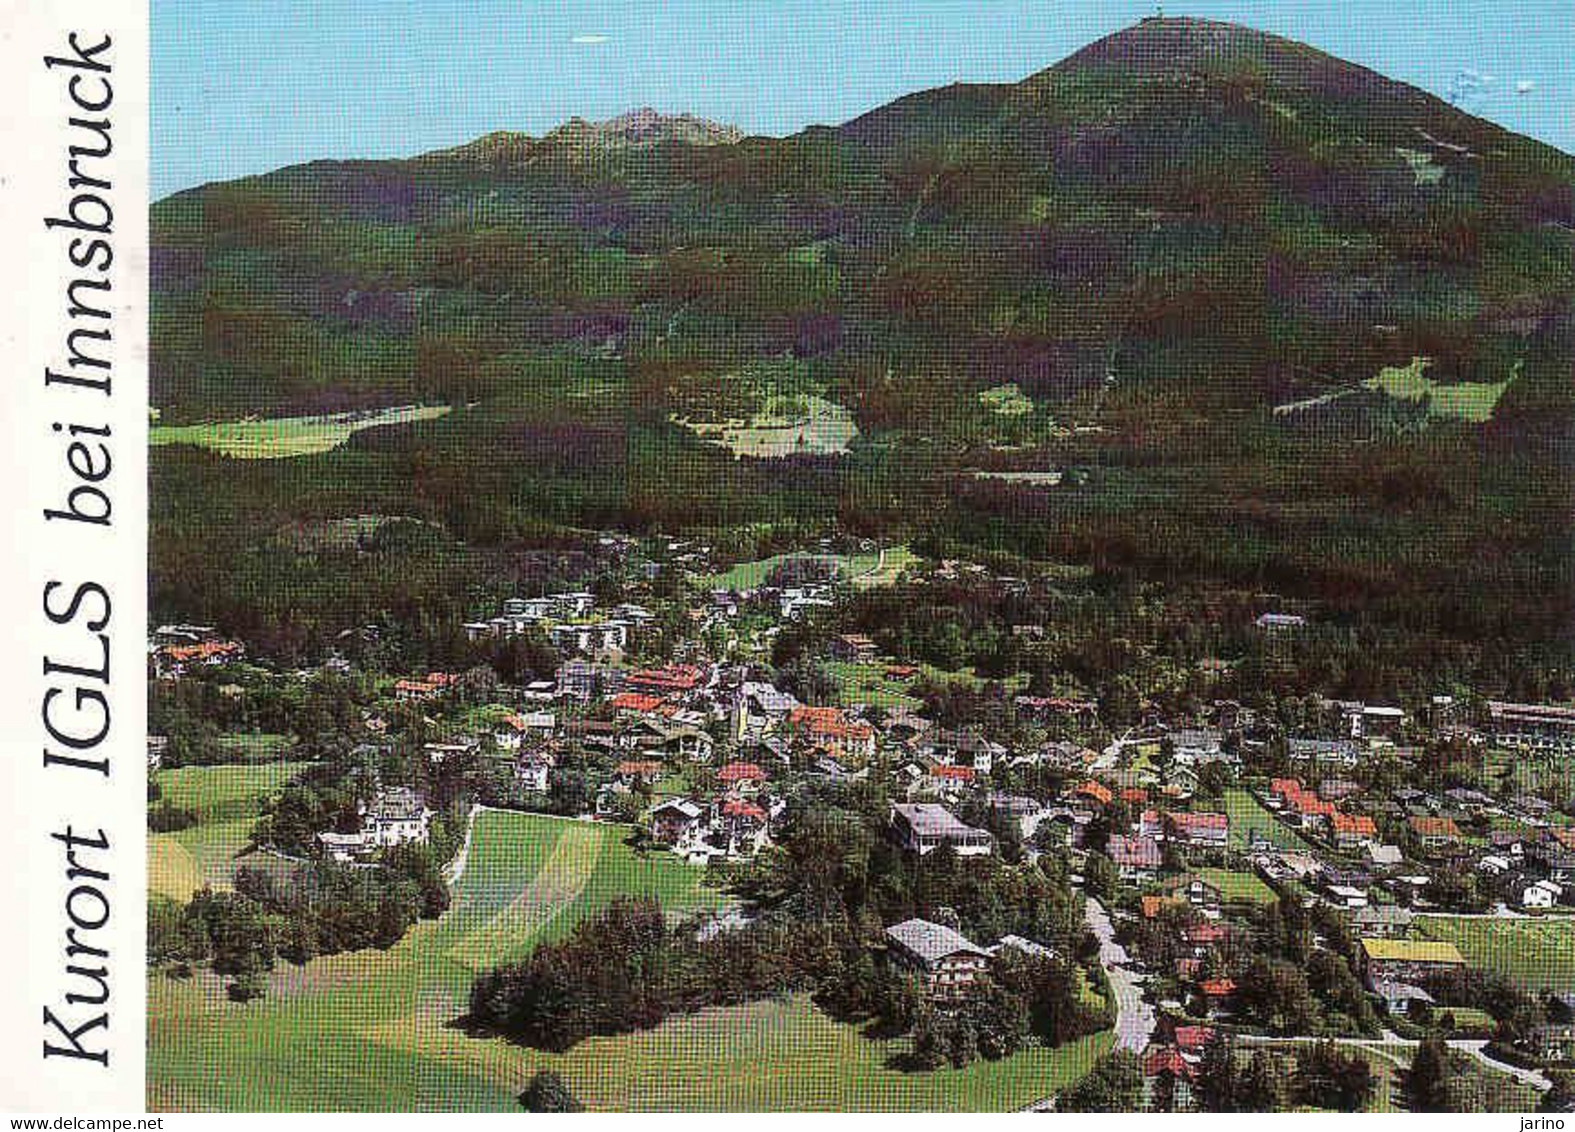 Austria > Tirol, Igls Bei Innsbruck, Used 2002 - Igls